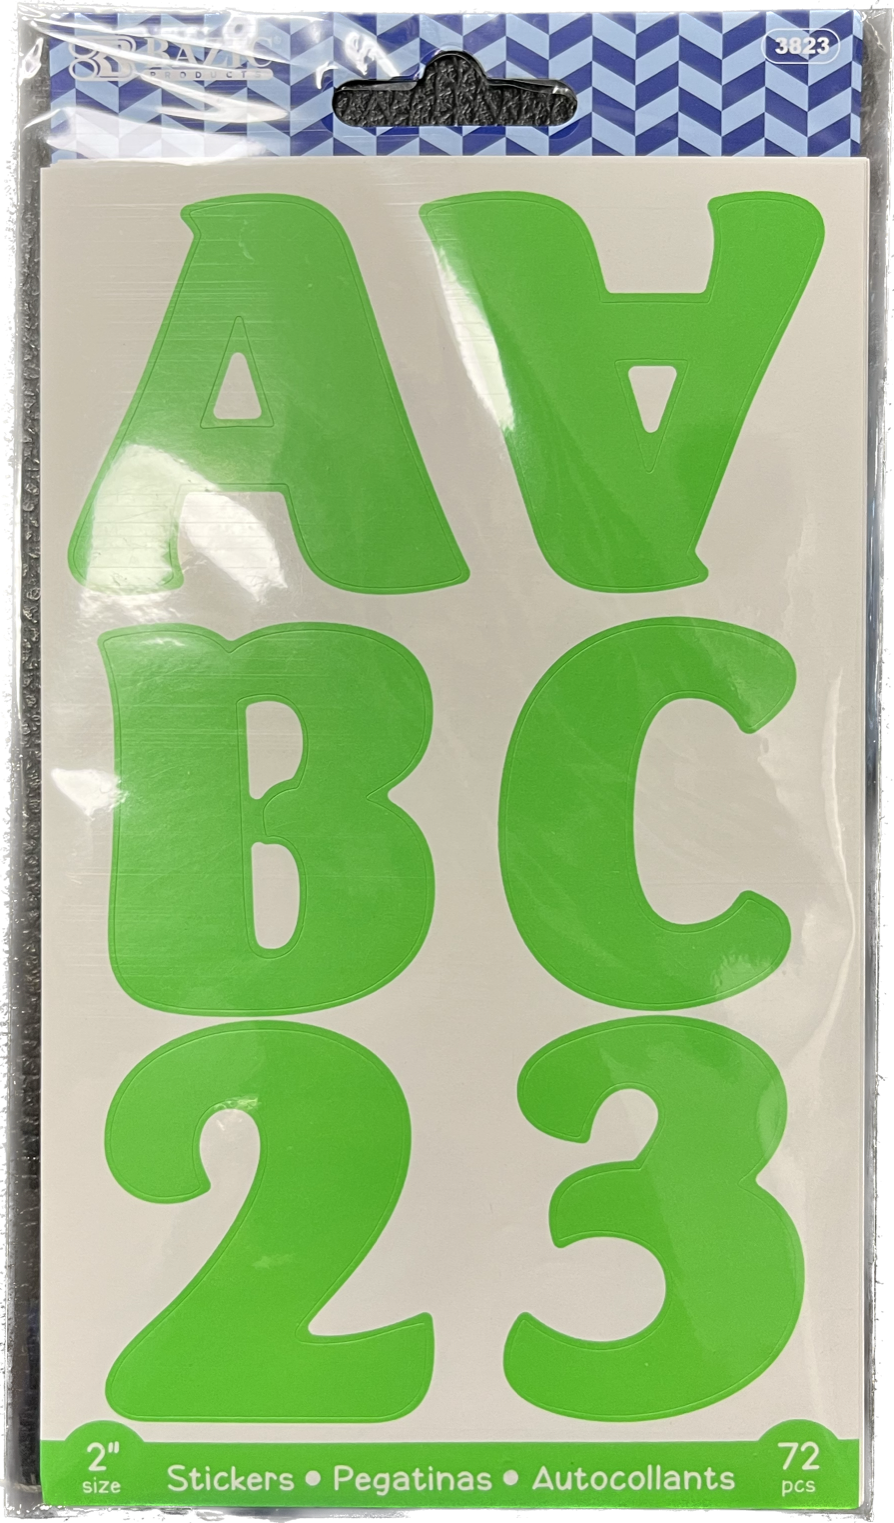 BAZIC Alphabet & Number 1 Black Color (6 SHEETS) - Bazicstore